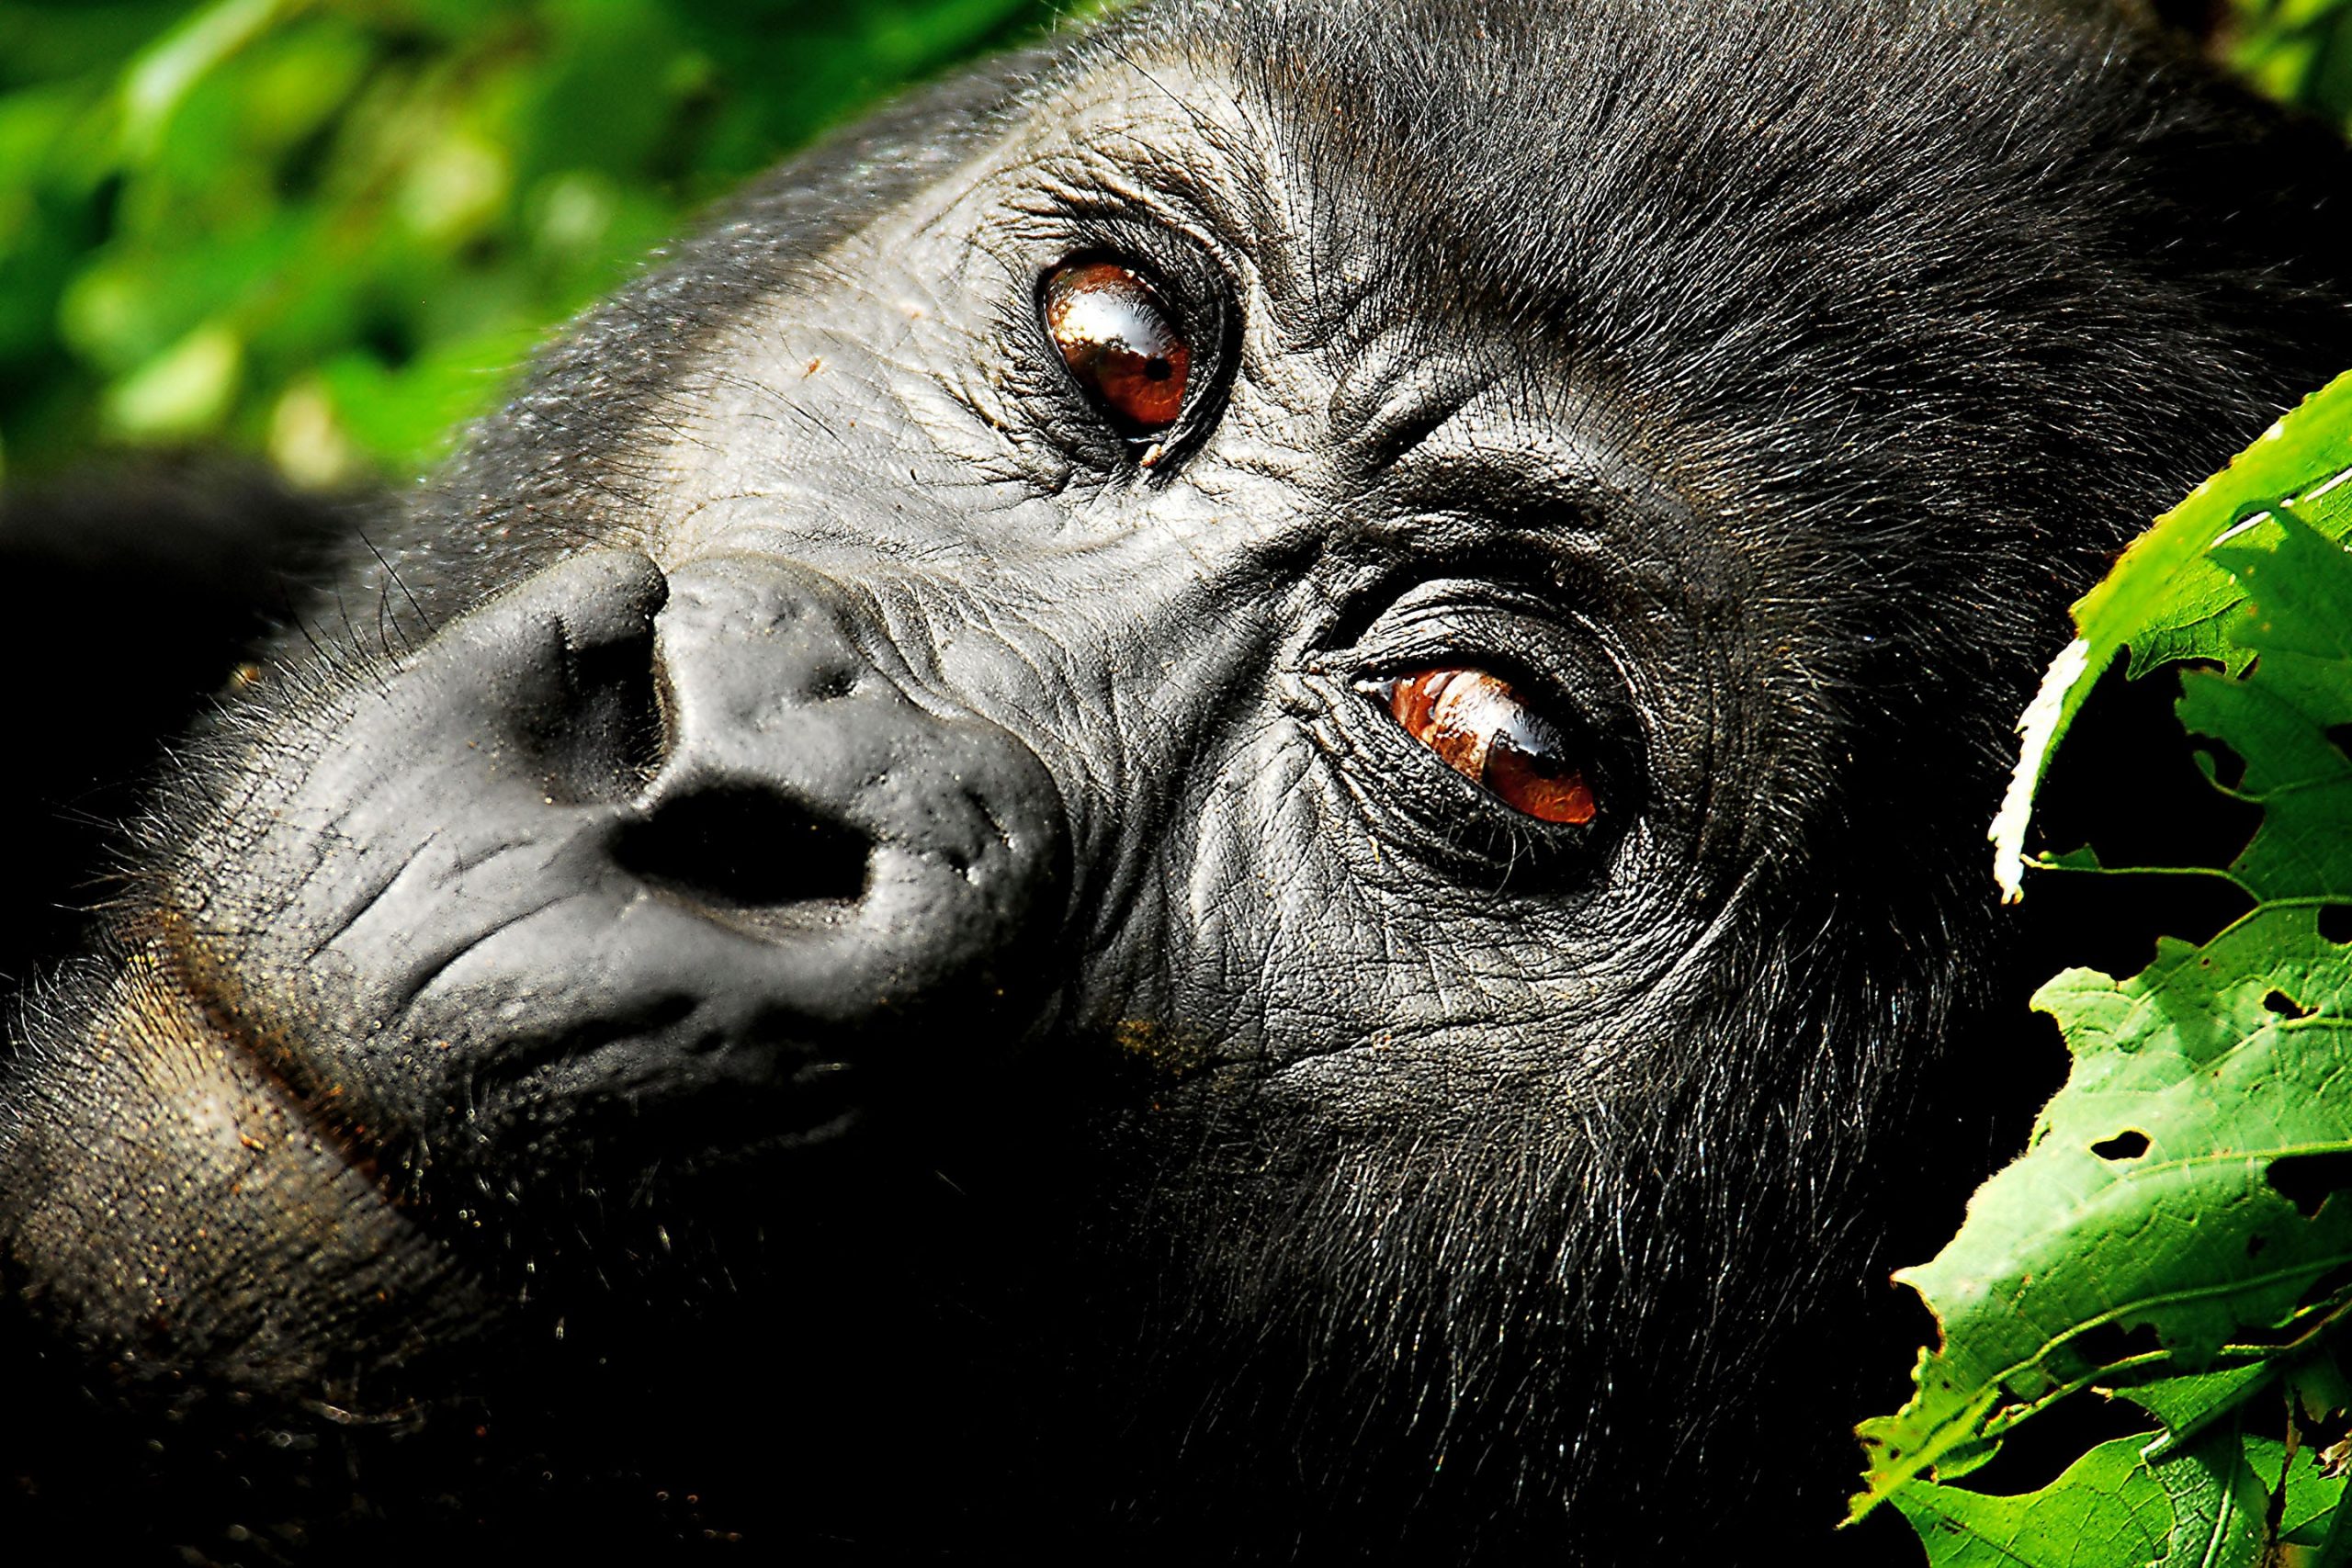 Is Gorilla Trekking ethical?